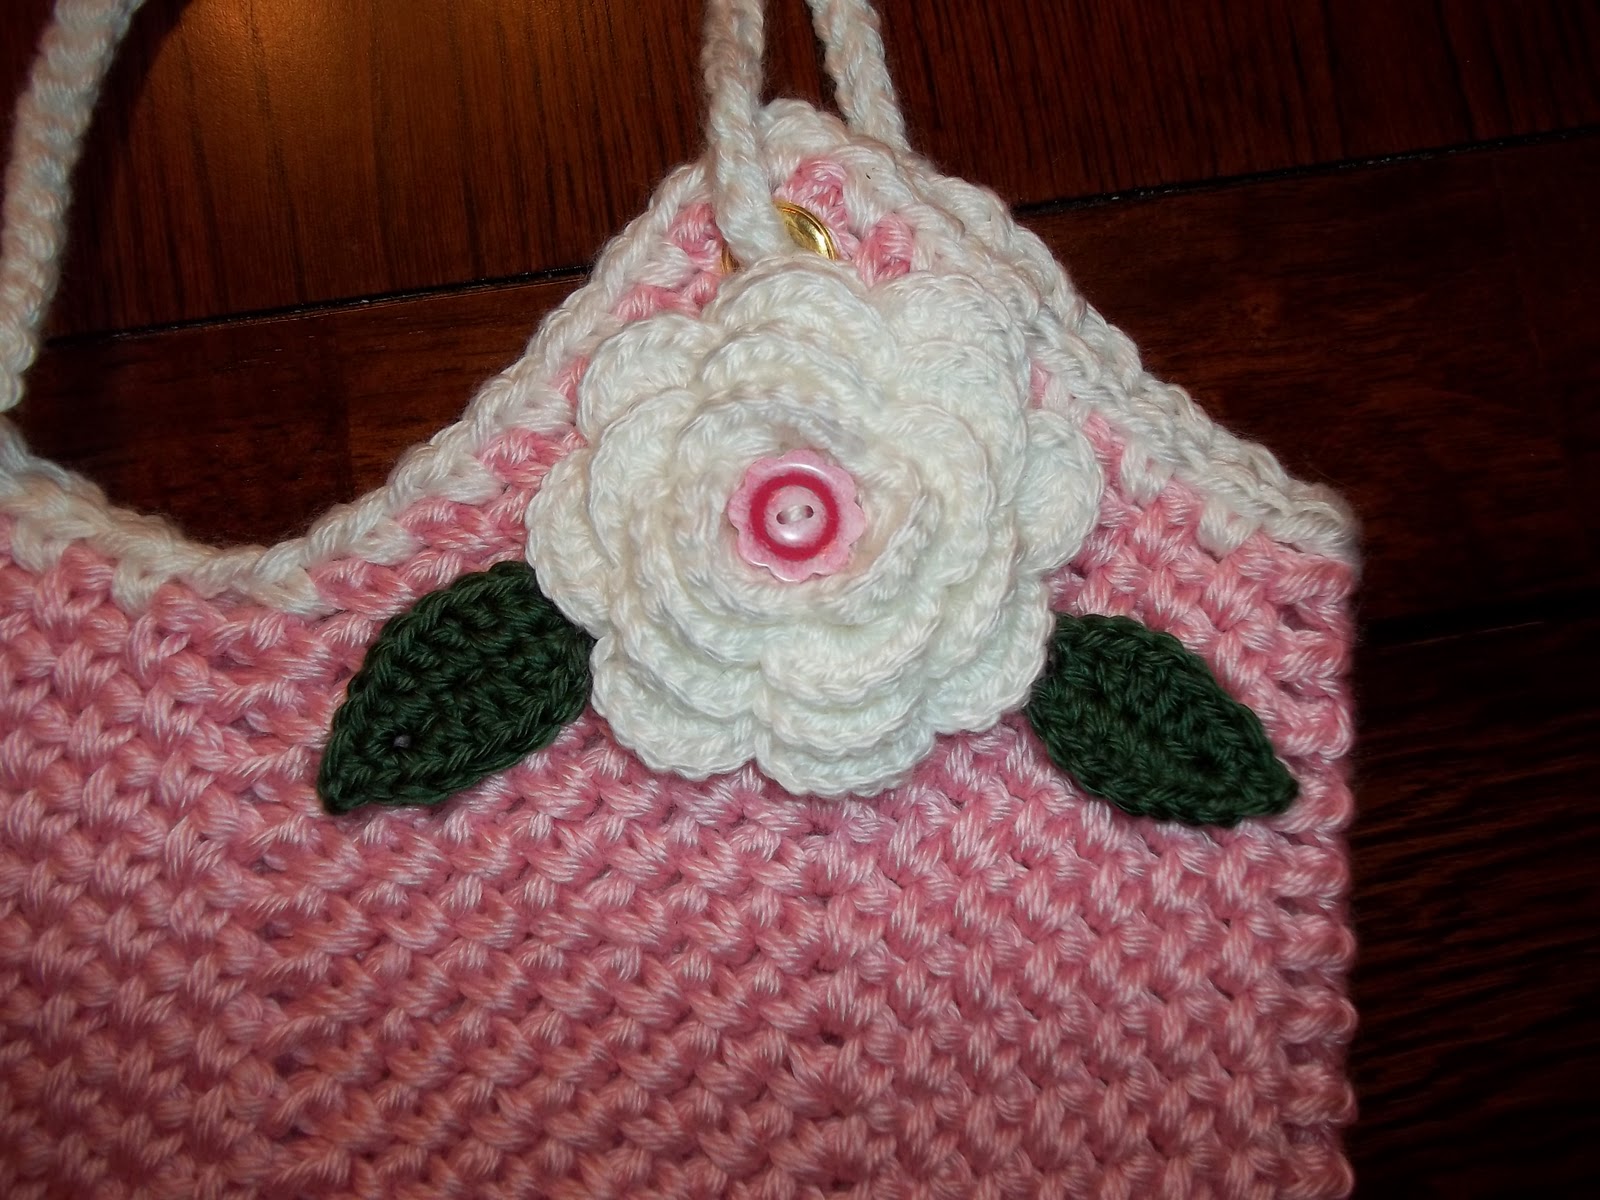 Tampa Bay Crochet: 10 Free Crochet Flower Patterns